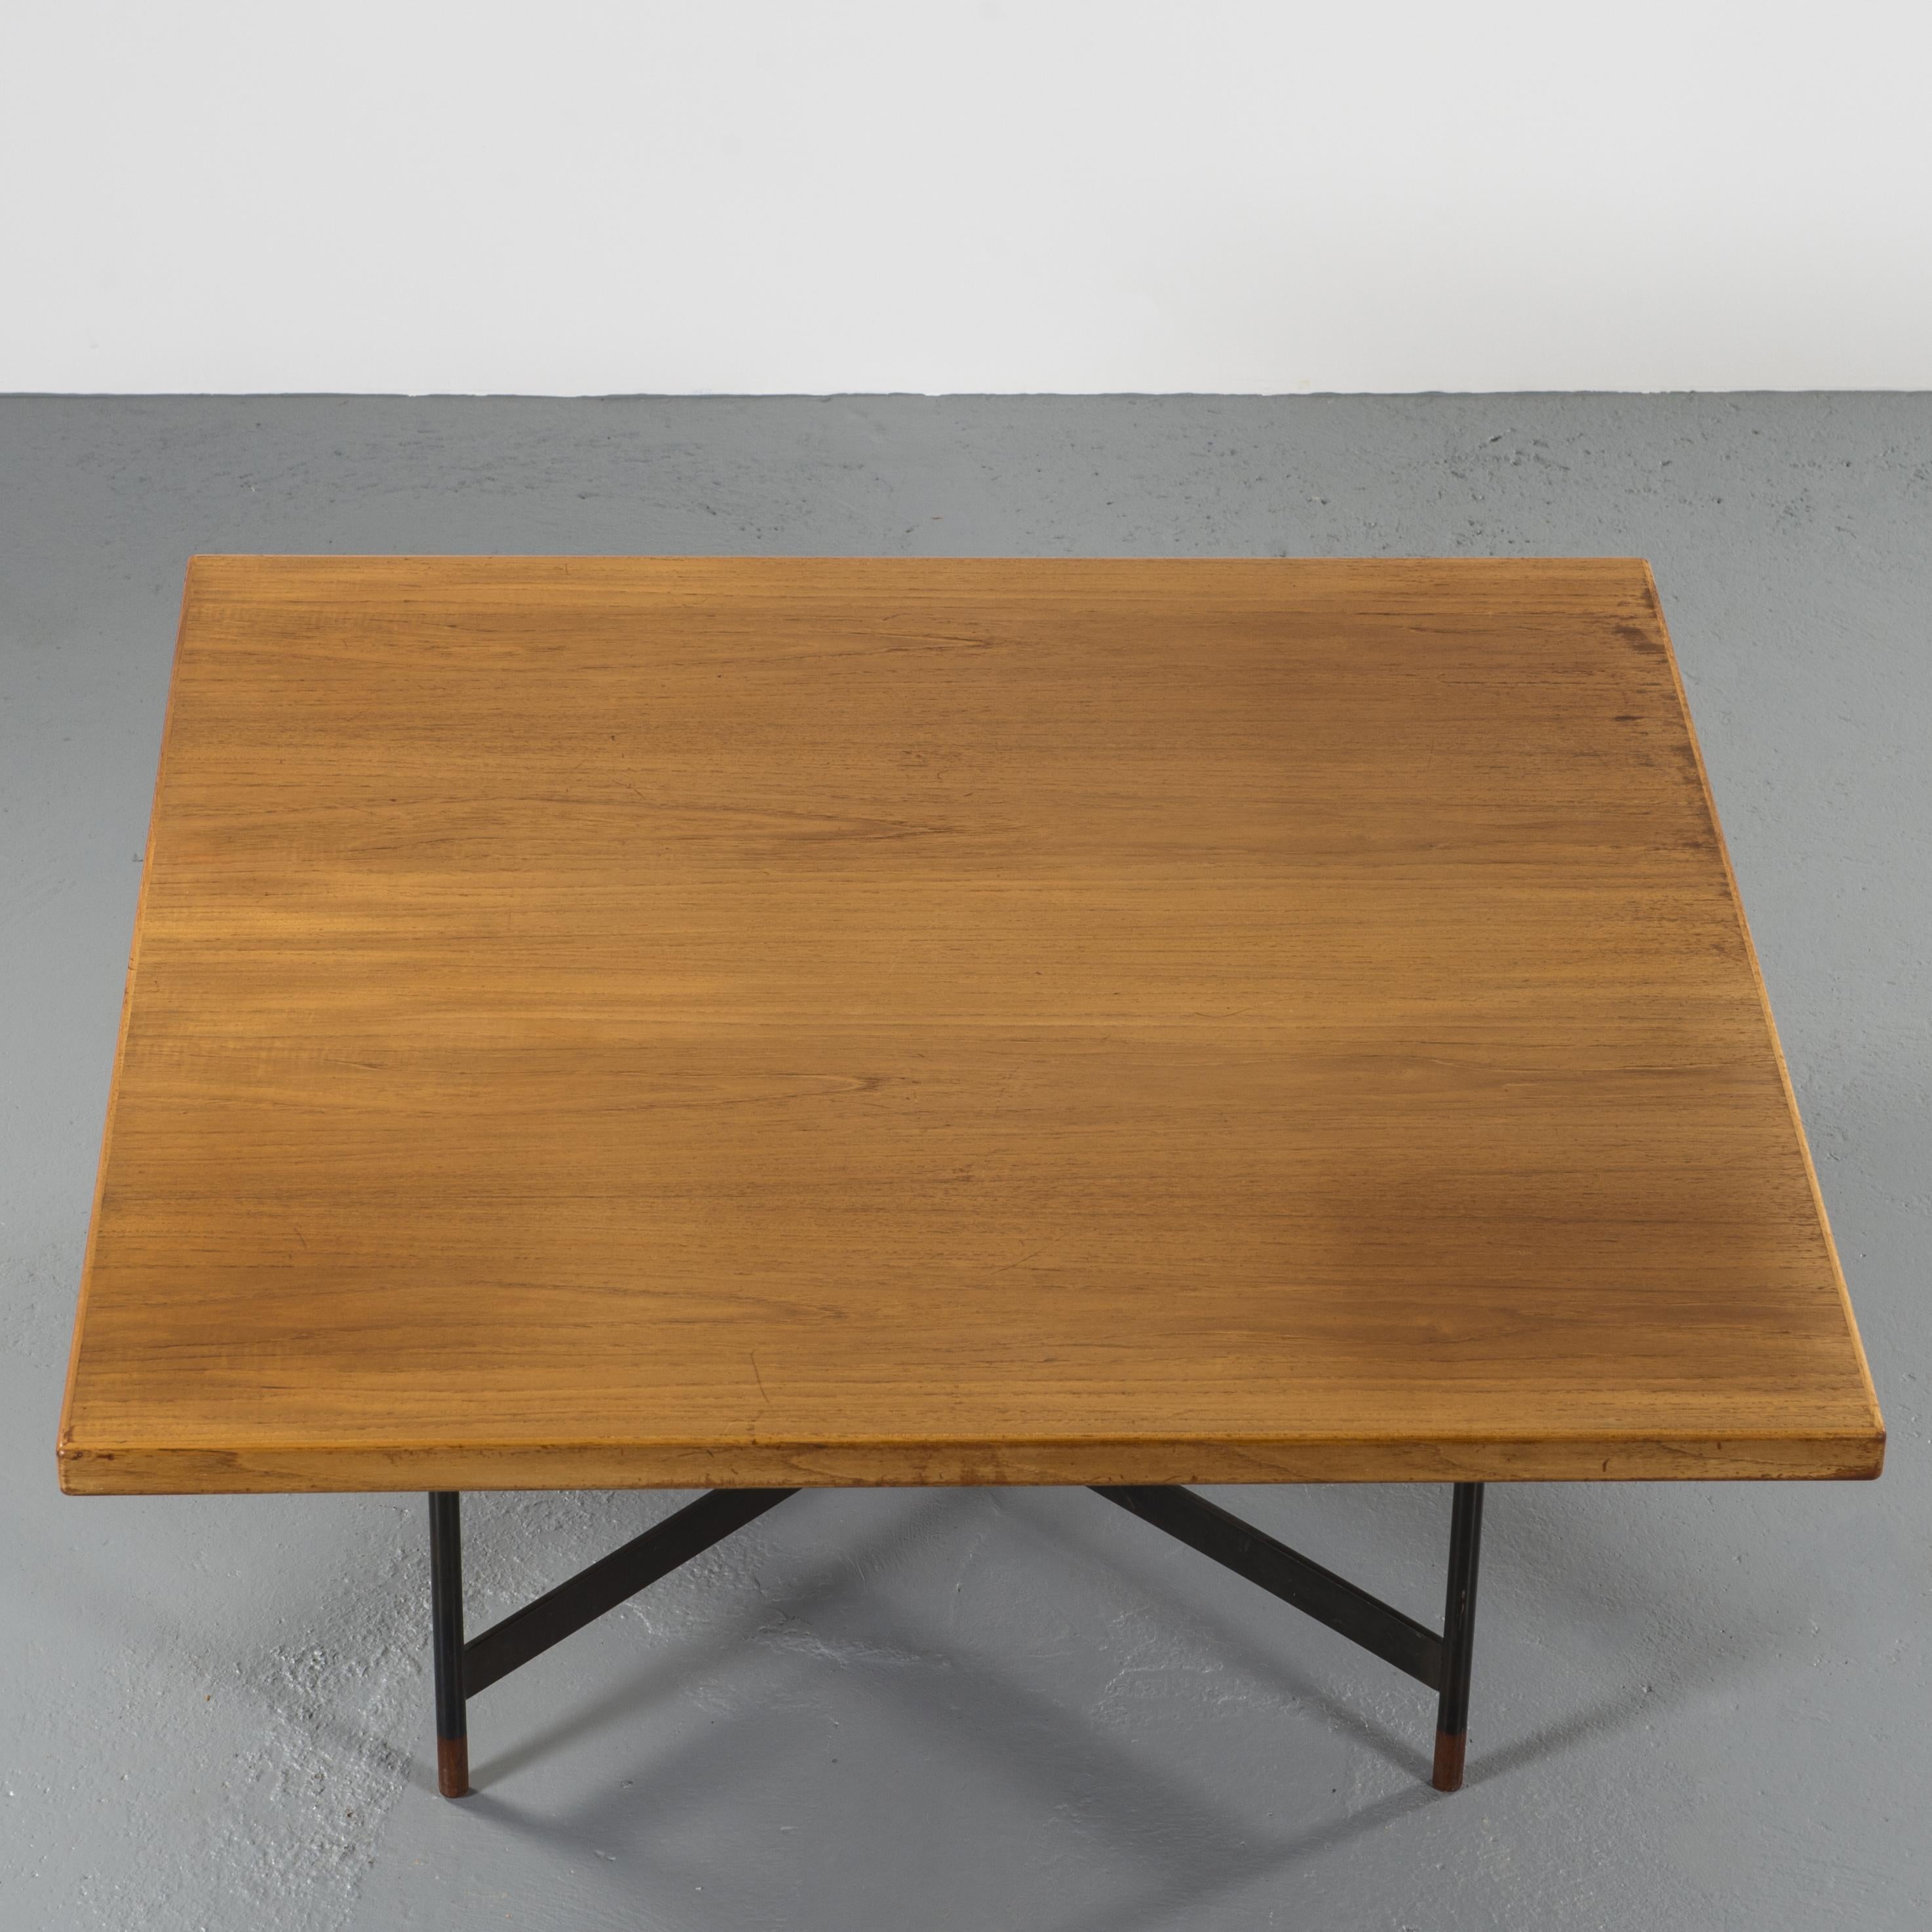 20th Century Square Coffee Table Model FJ57 by Finn Juhl, Vodder Edition